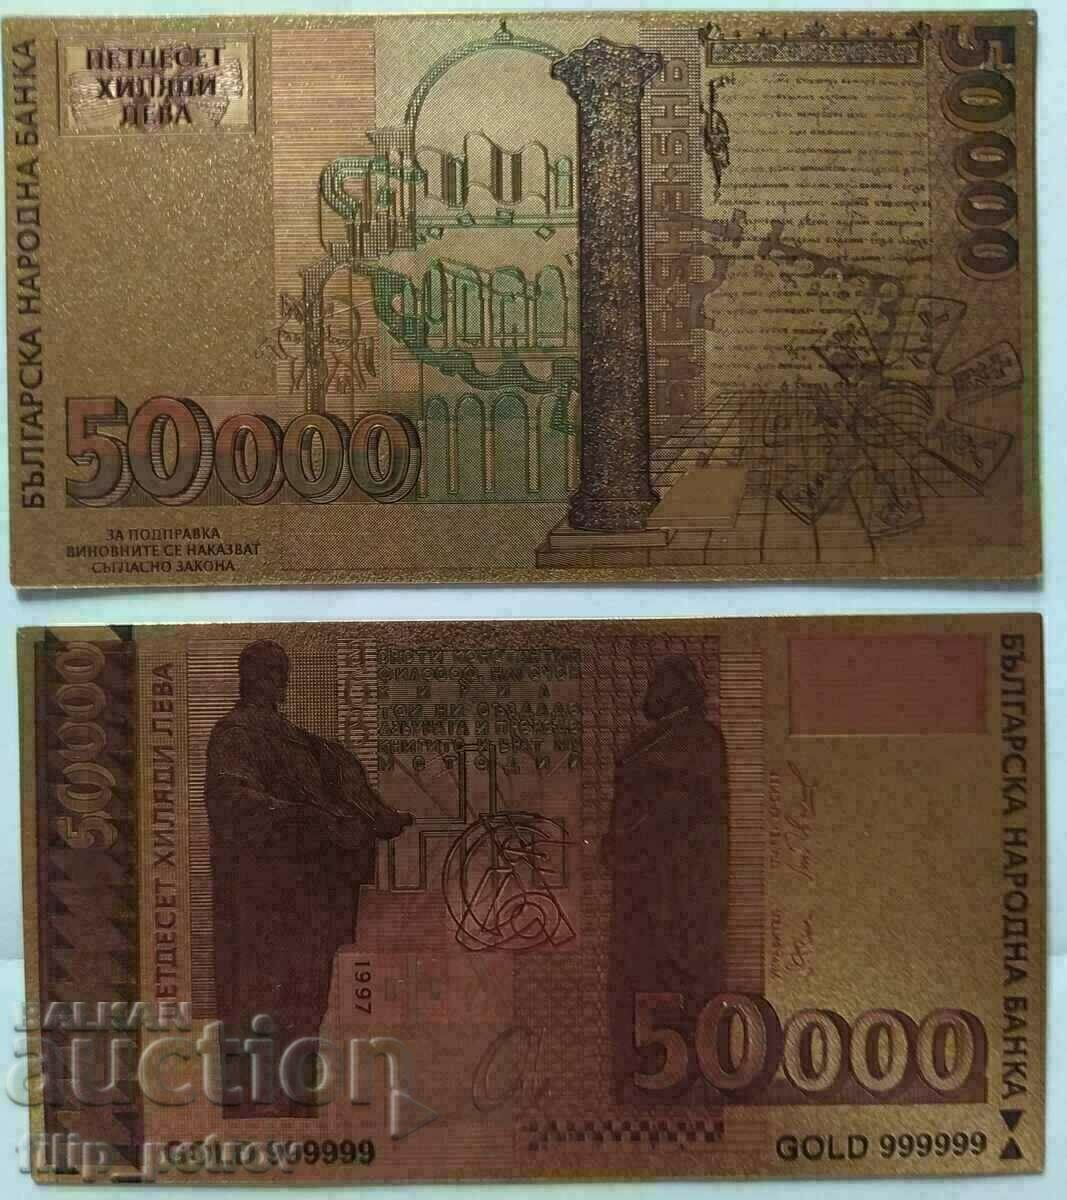 2 pcs. BGN 50,000 1997 gold-plated souvenir banknotes